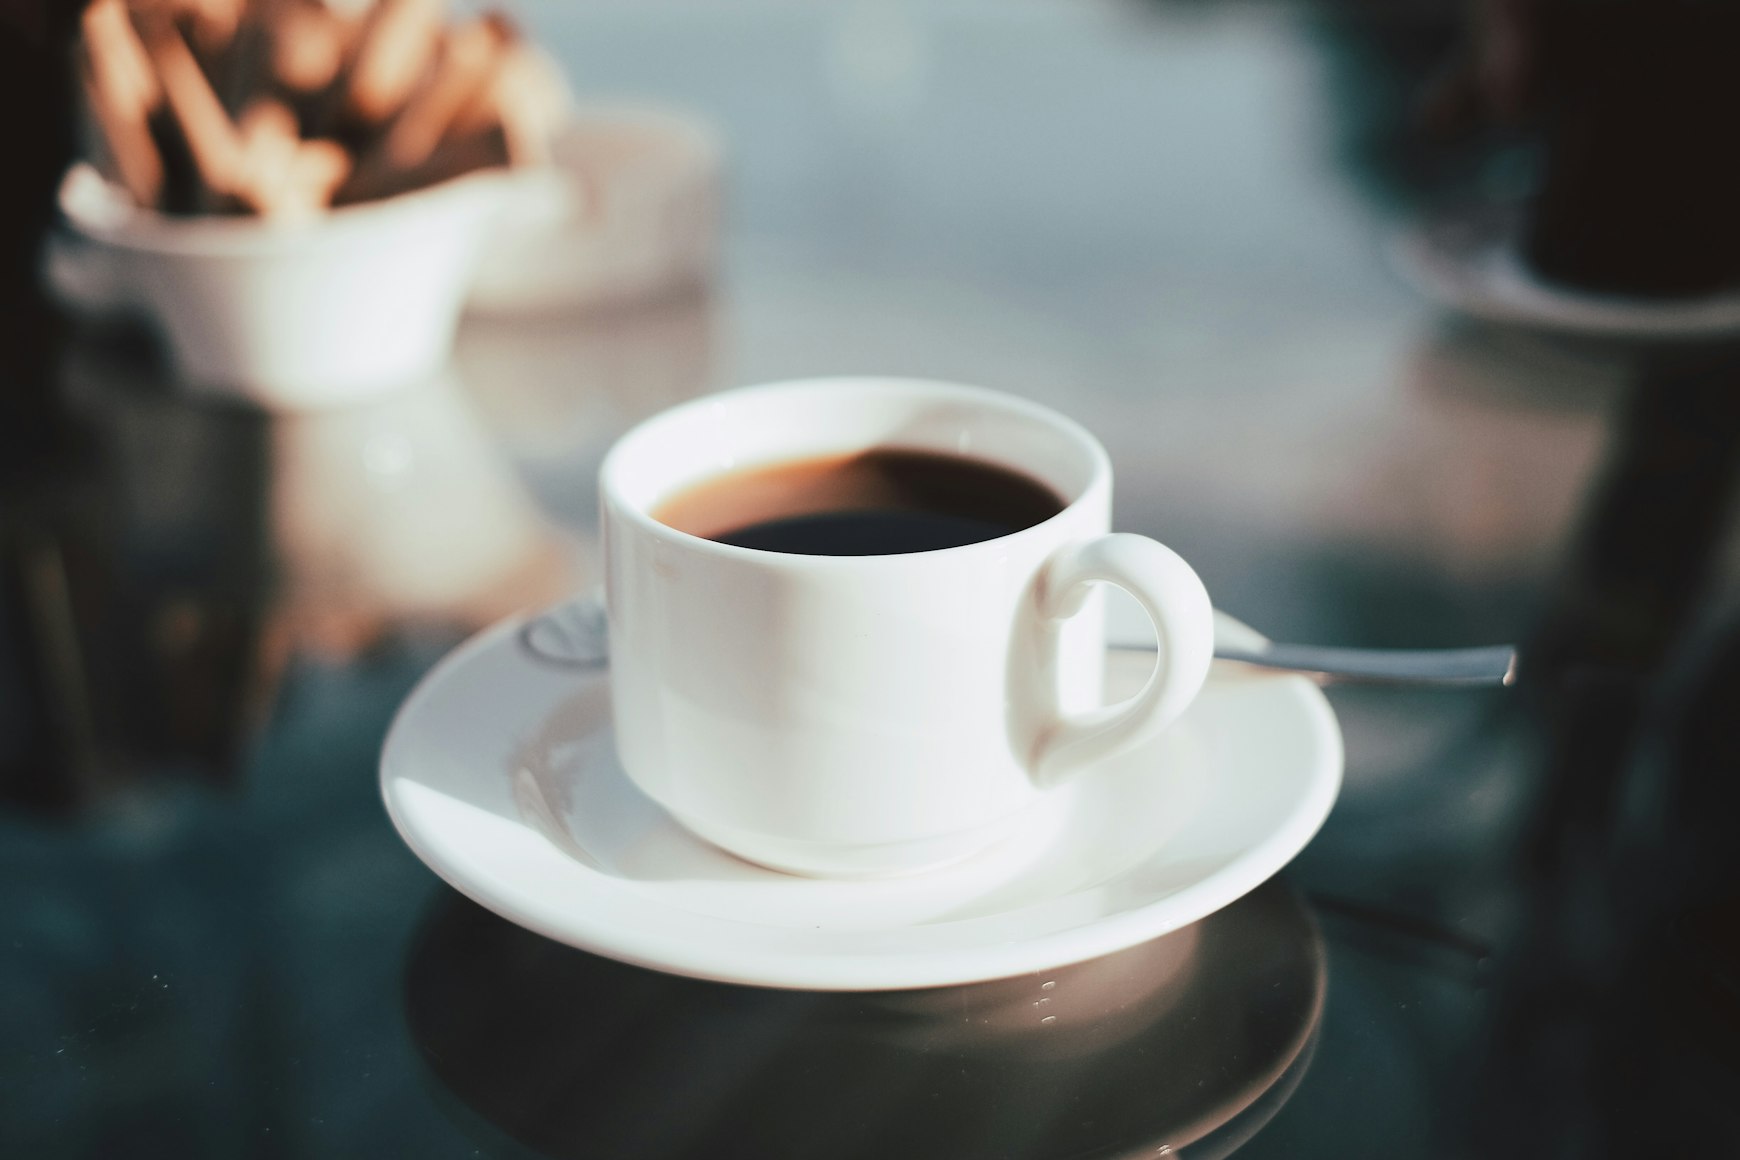 Coffee within a mug, resting on a saucer alongside stirring spoon